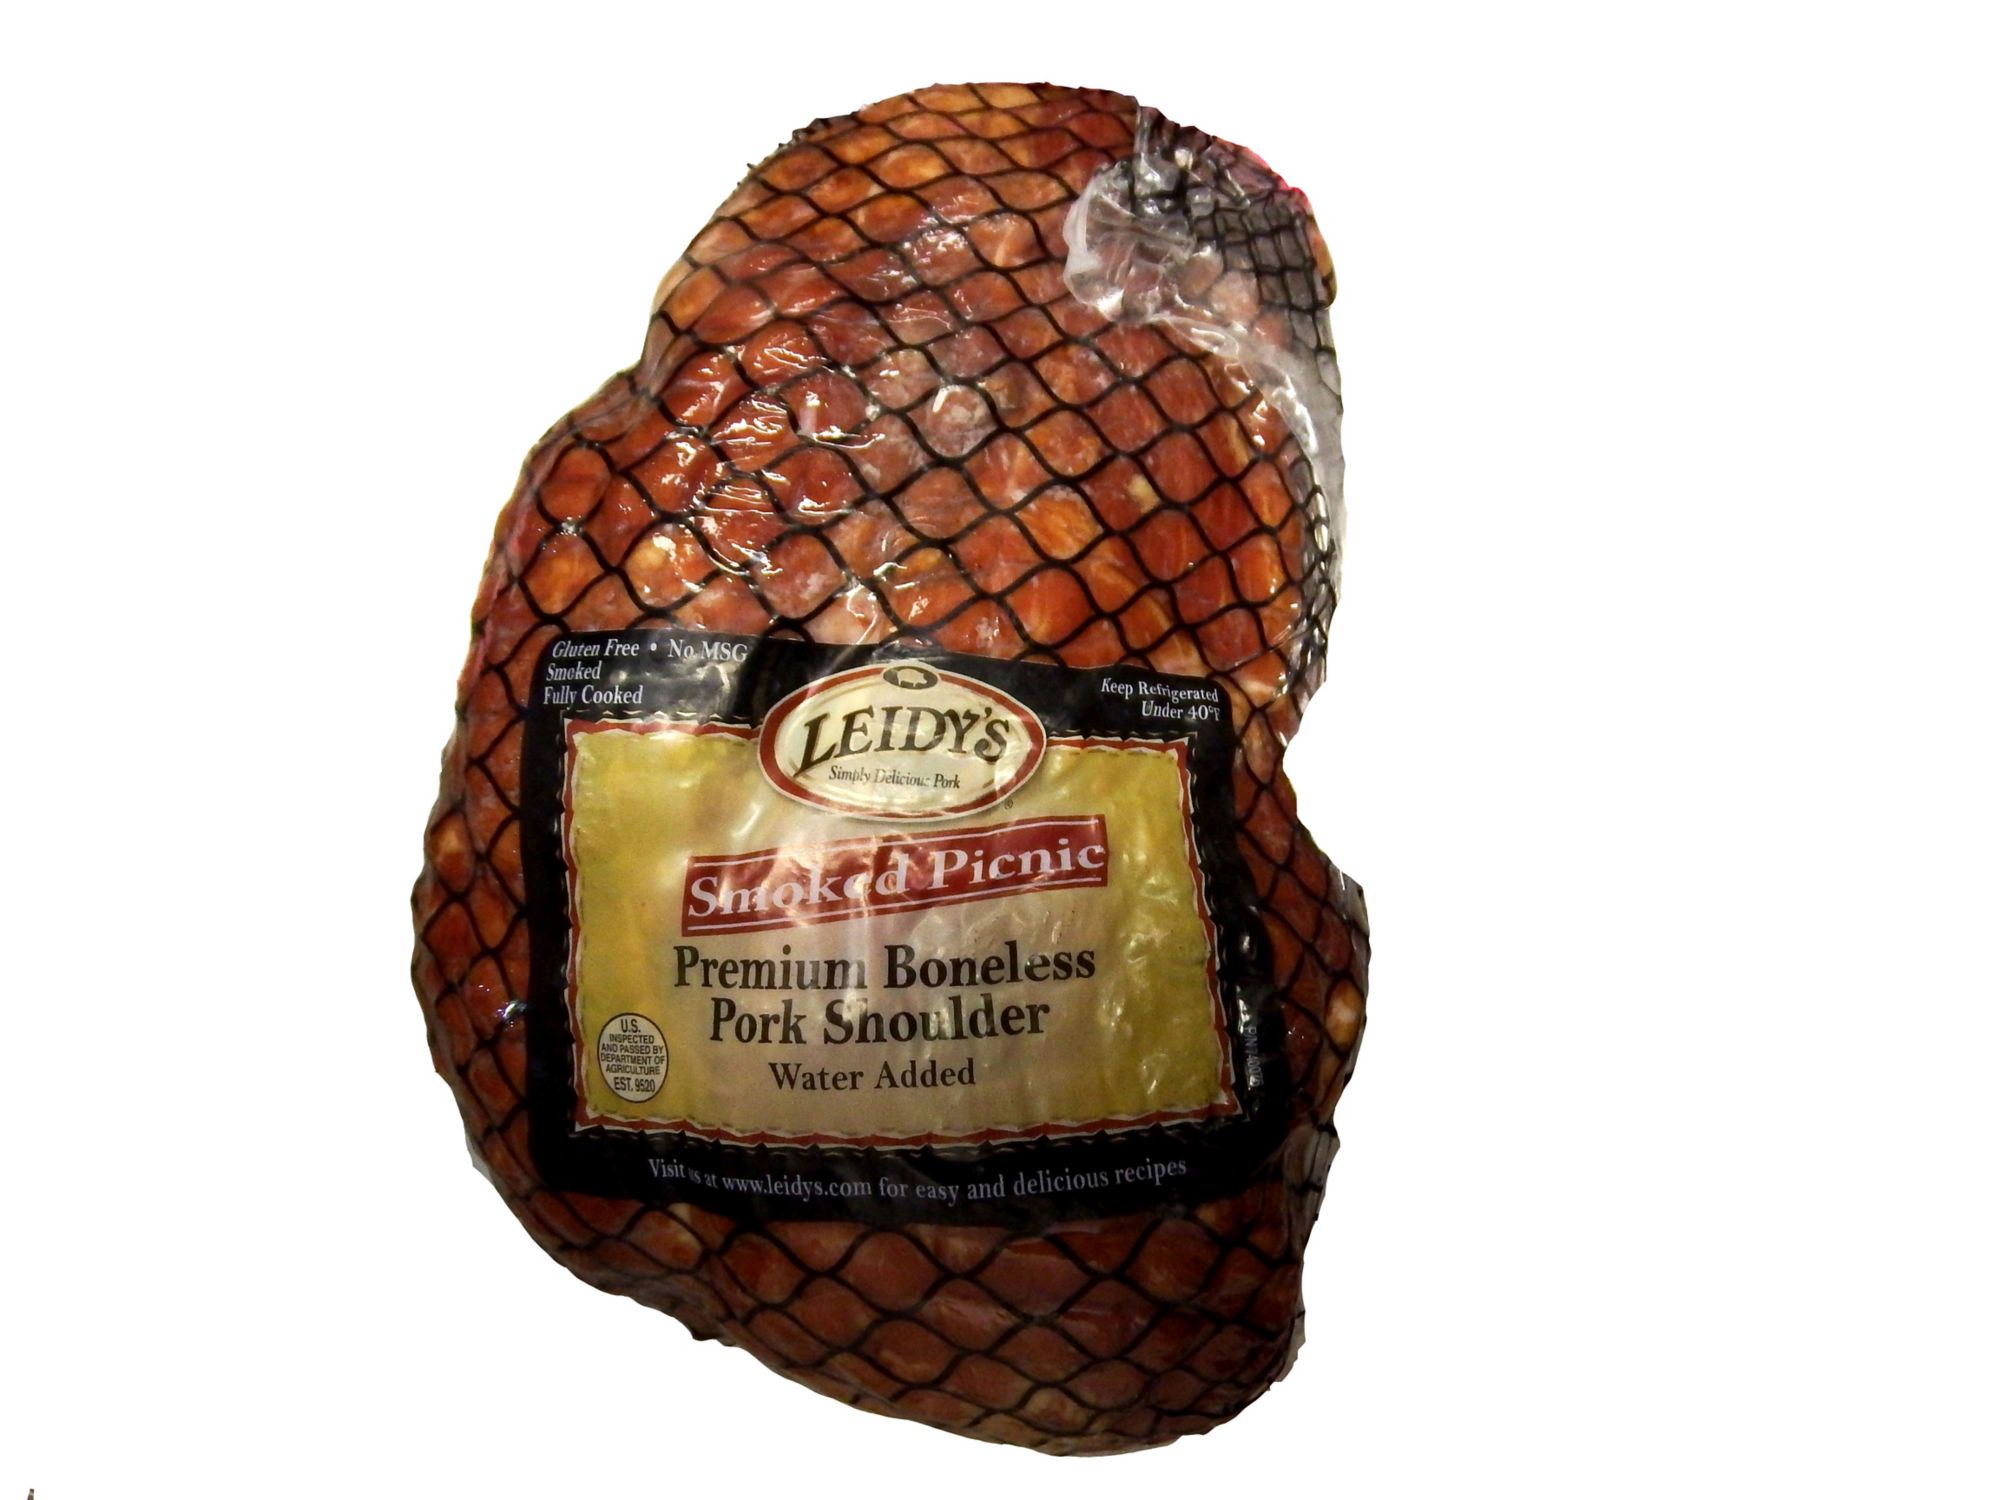 Leidy's Smoked Picnic Premium Boneless Smoked Pork Shoulder, 2.25-3.5lbs.